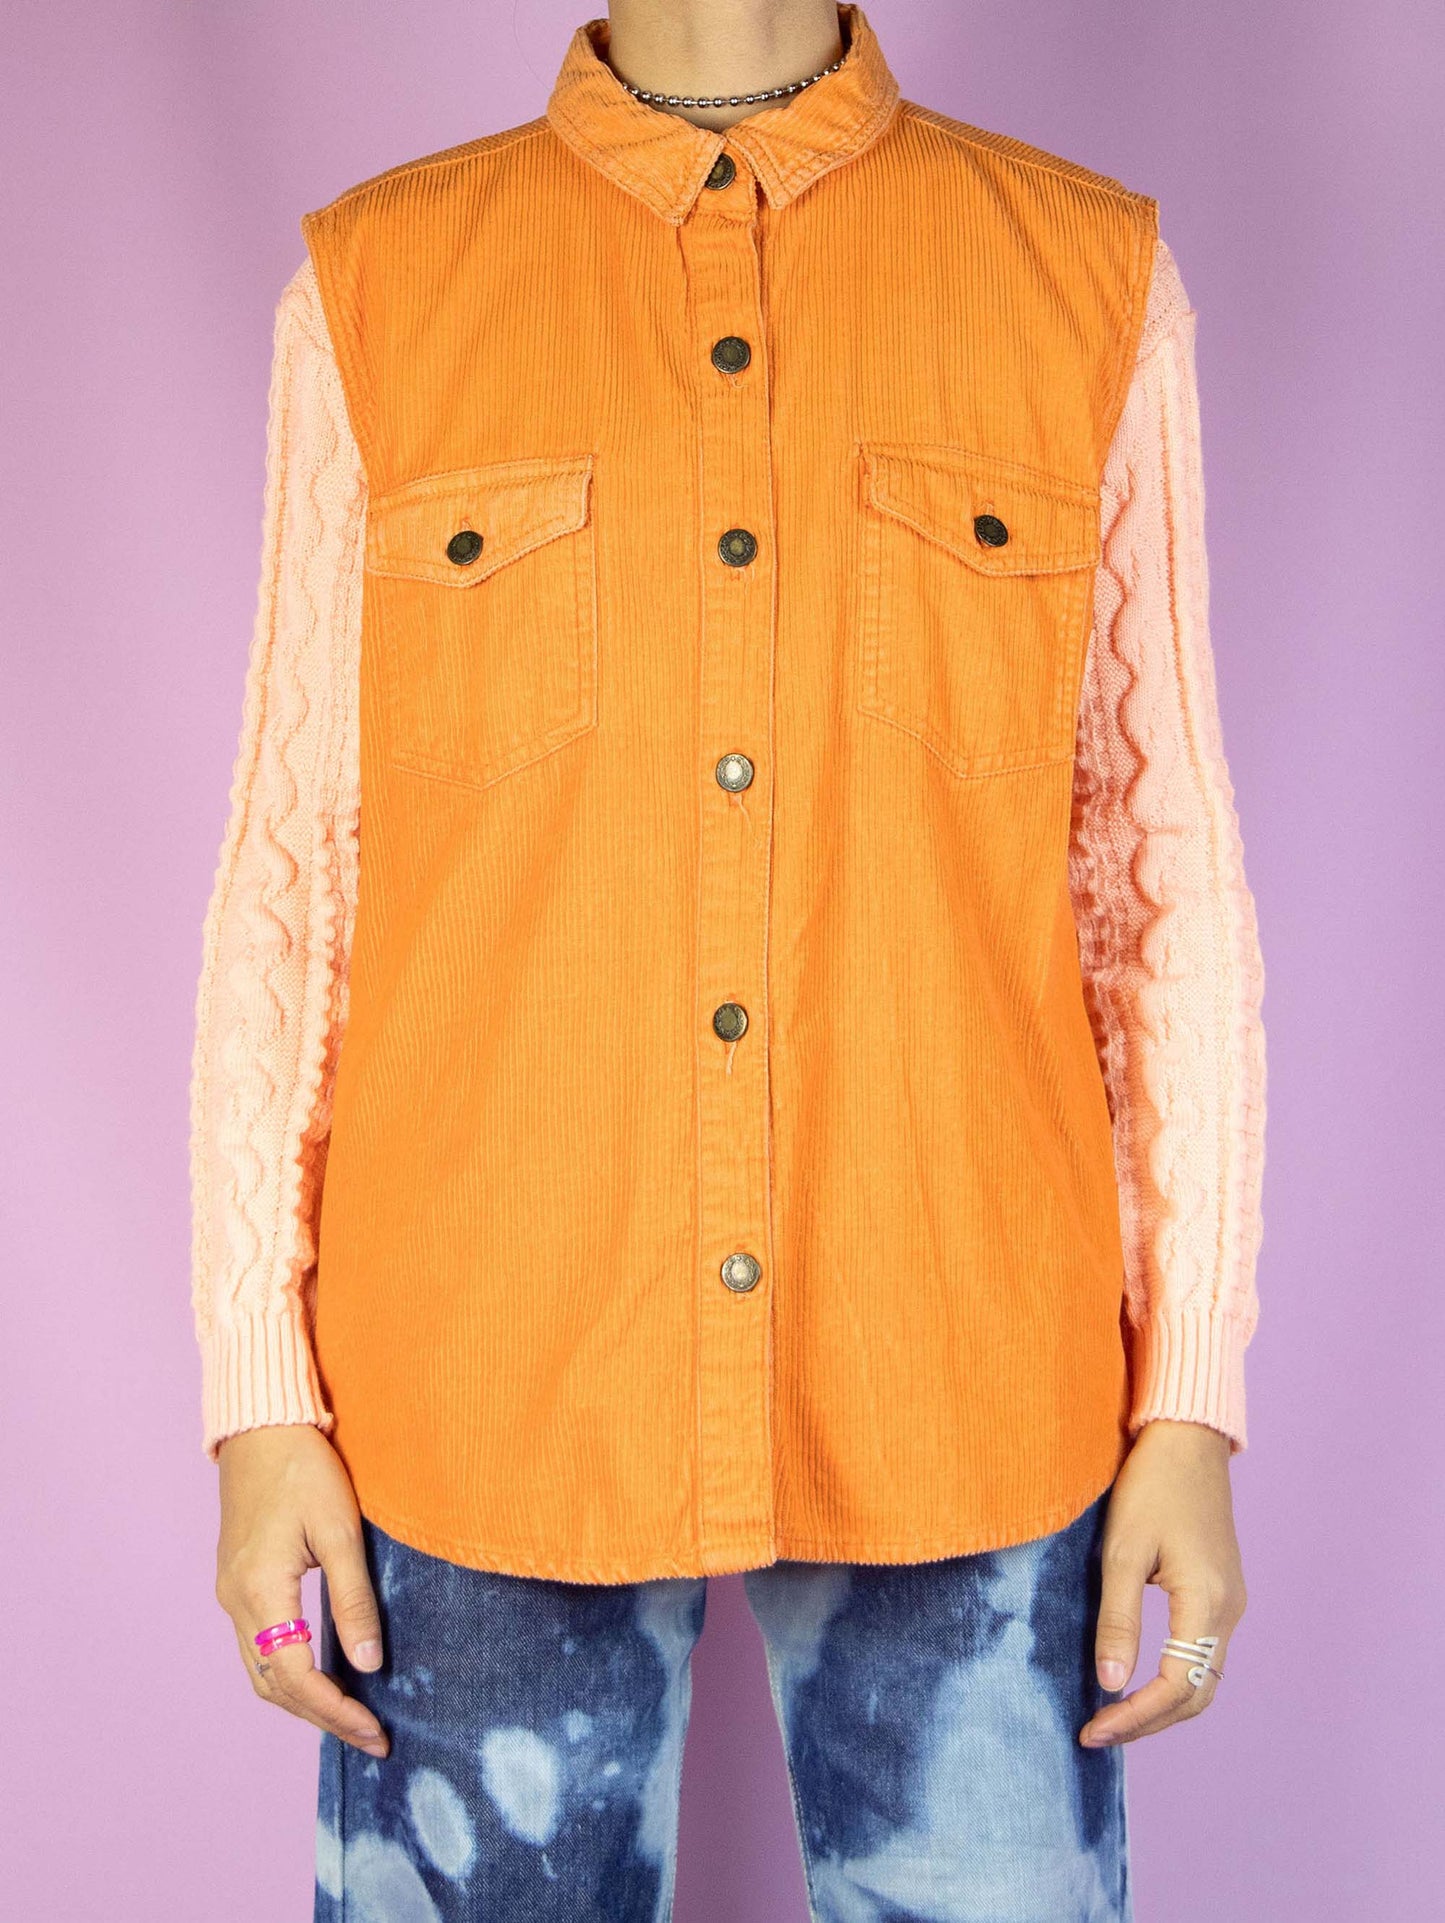 The Vintage 90s Orange Corduroy Vest Jacket is an orange corduroy vest with a collar, pockets, and button closure. Retro grunge 1990s utility jacket.